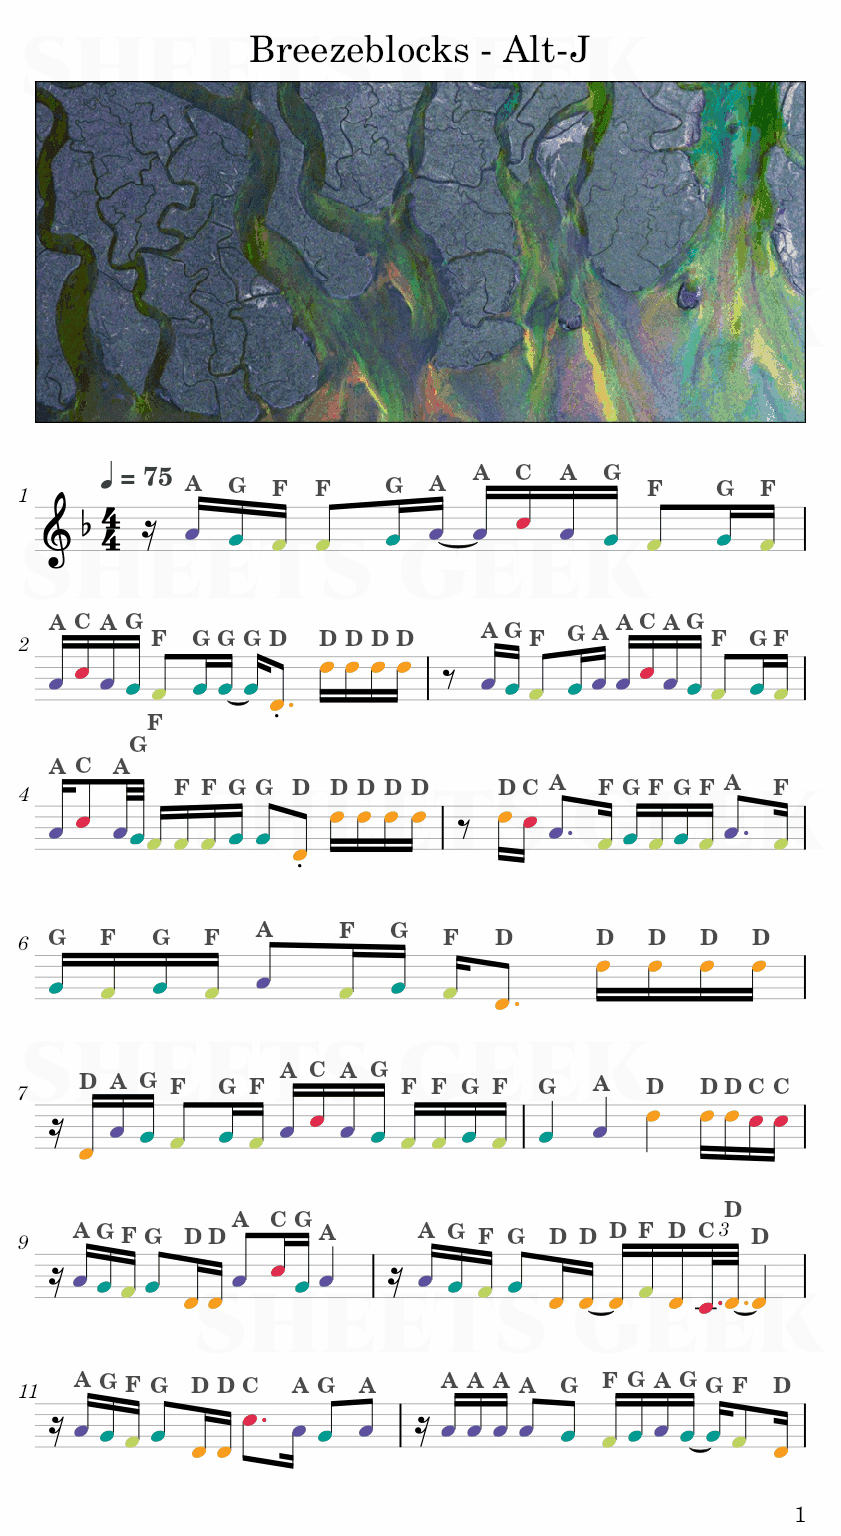 Breezeblocks - Alt-J Easy Sheet Music Free for piano, keyboard, flute, violin, sax, cello page 1